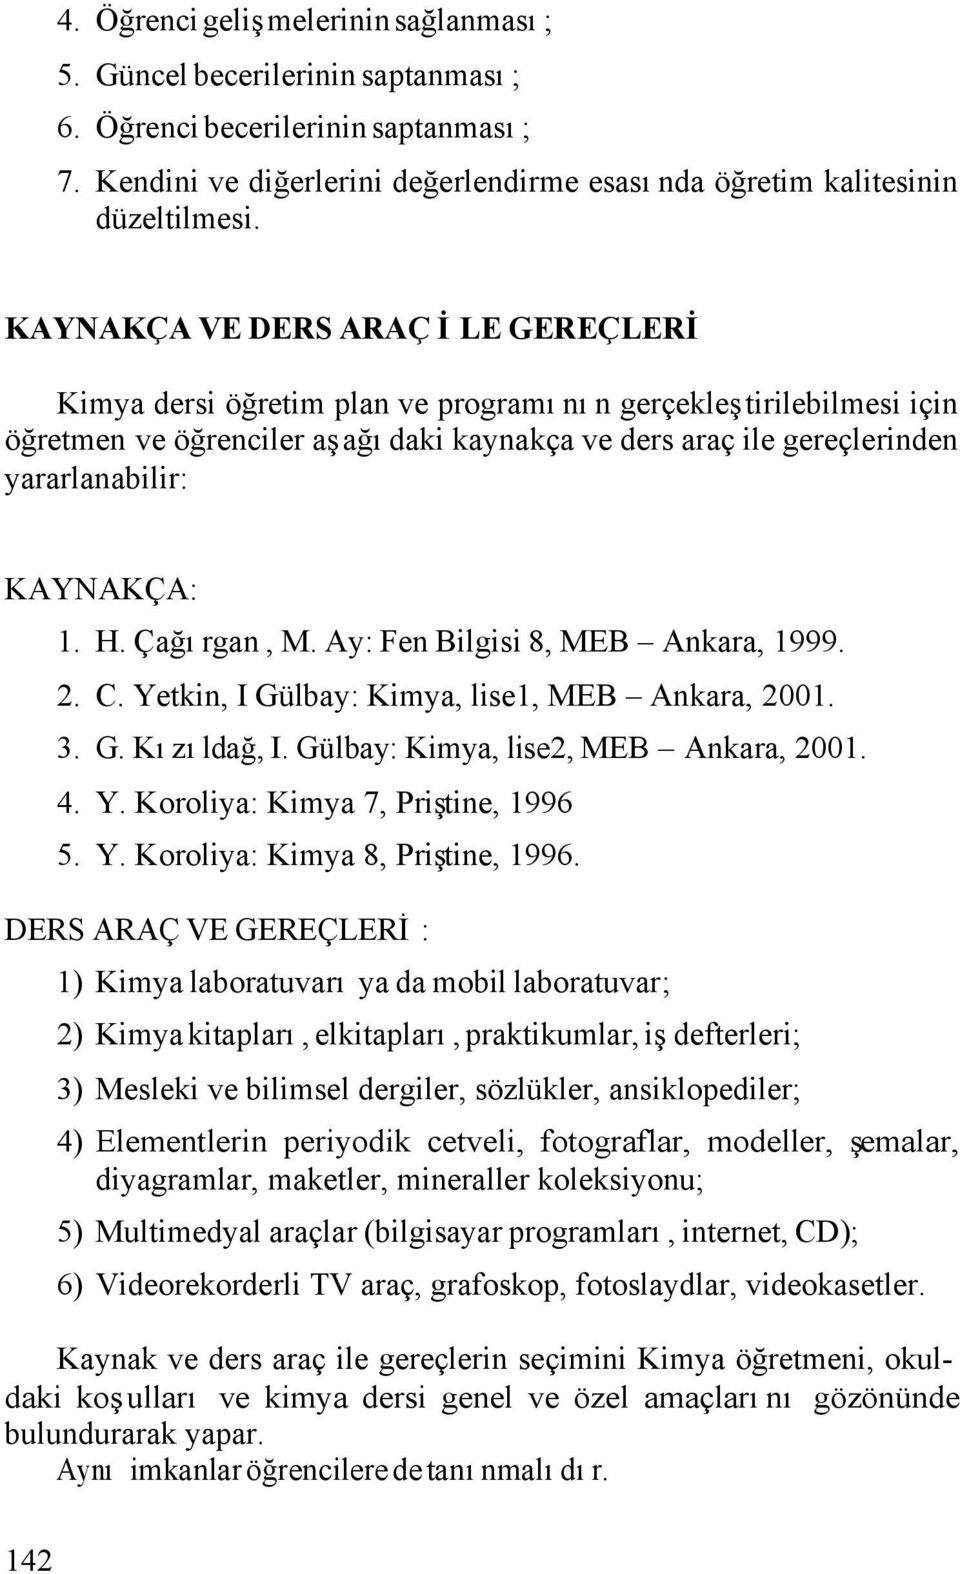 KAYNAKÇA: 1. H. Çağırgan, M. Ay: Fen Bilgisi 8, MEB Ankara, 1999. 2. C. Yetkin, I Gülbay: Kimya, lise1, MEB Ankara, 2001. 3. G. Kızıldağ, I. Gülbay: Kimya, lise2, MEB Ankara, 2001. 4. Y. Koroliya: Kimya 7, Priştine, 1996 5.